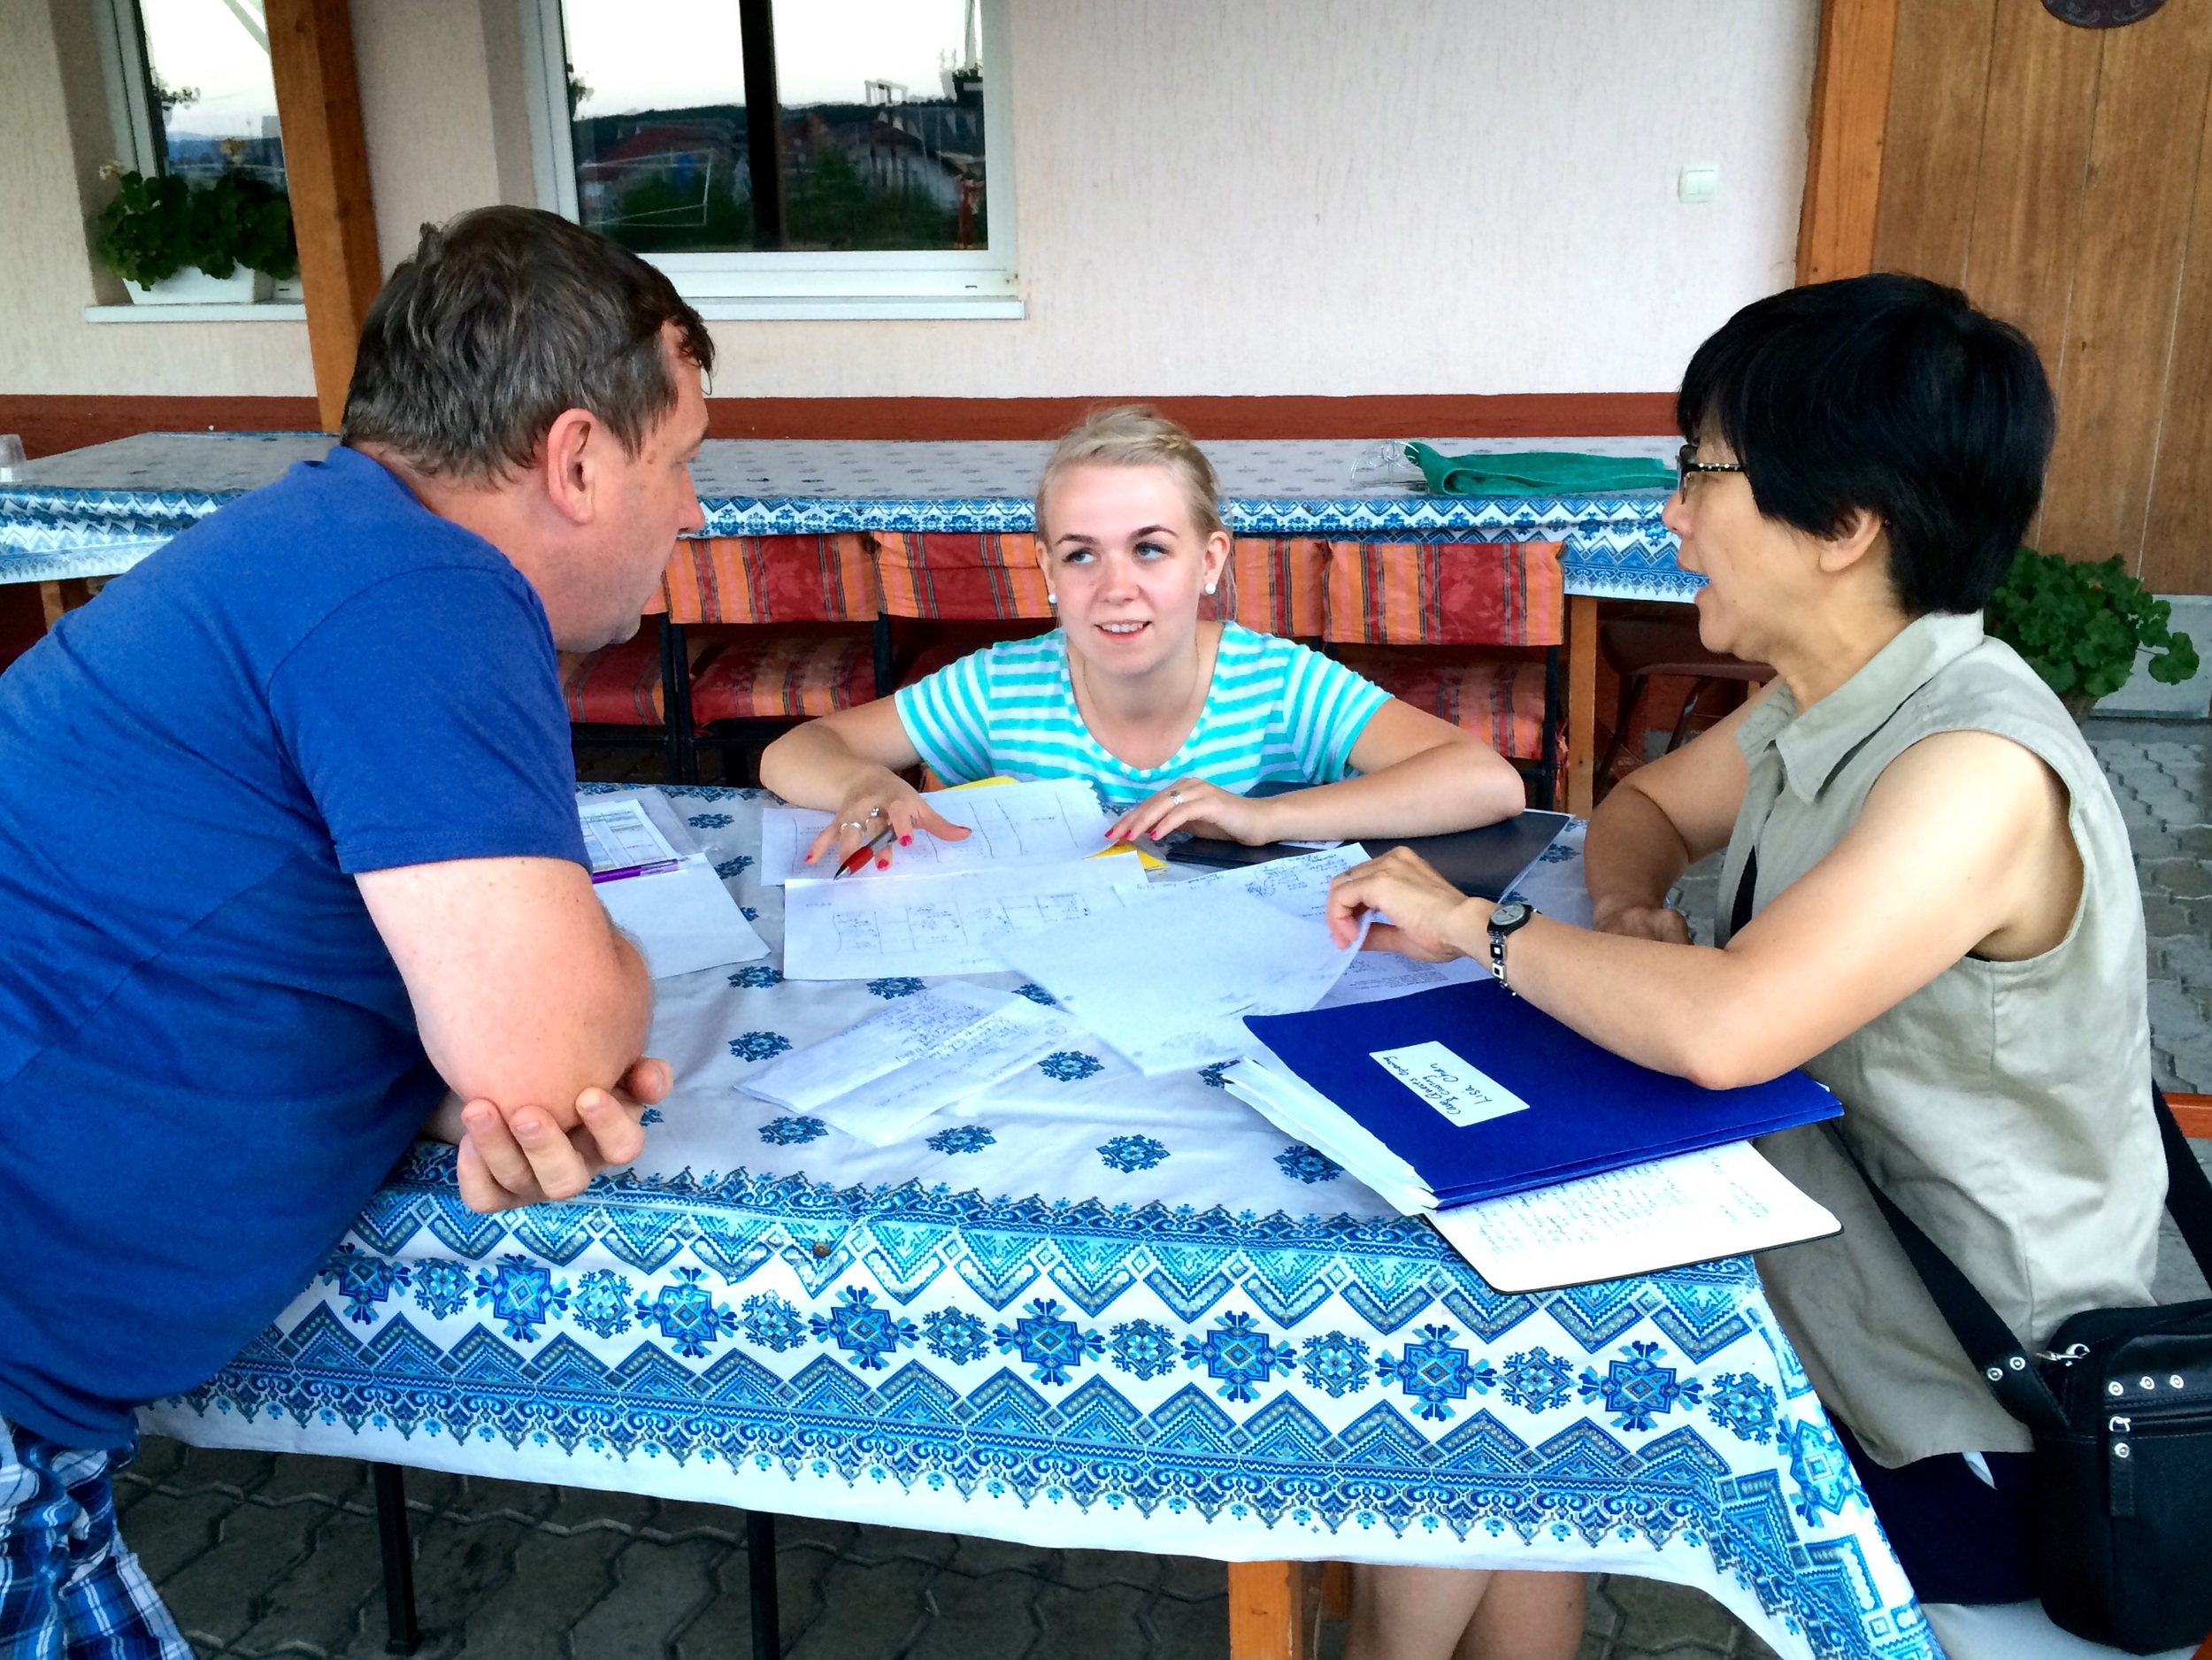 Finalizing Camp details with Lera, our Ukraine team leader